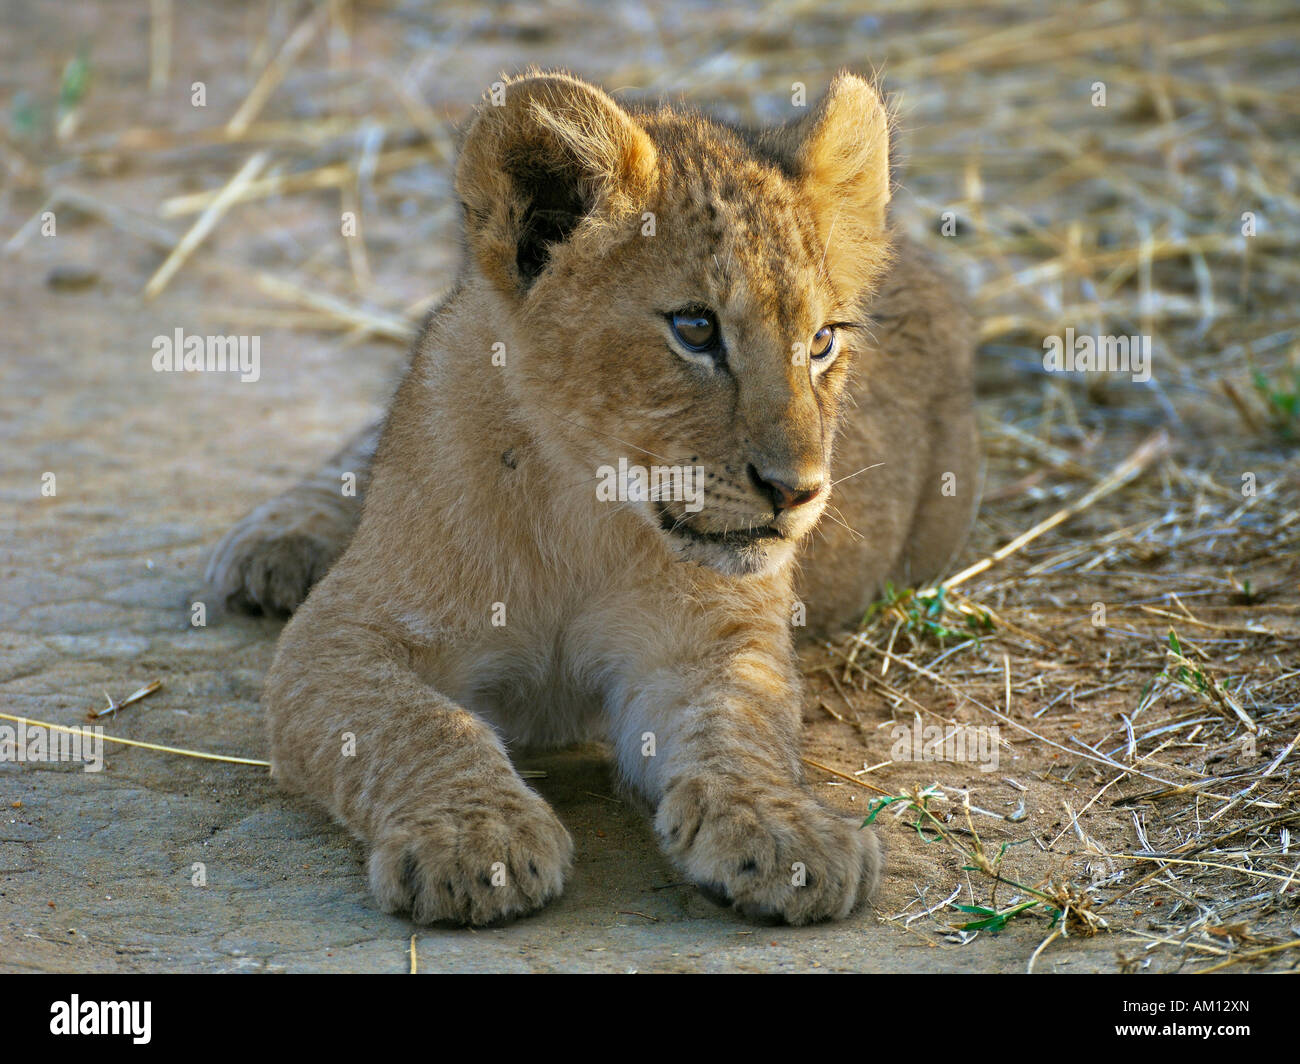 Lion (Panthera leo), Cub, Masai Mara, Kenya Banque D'Images